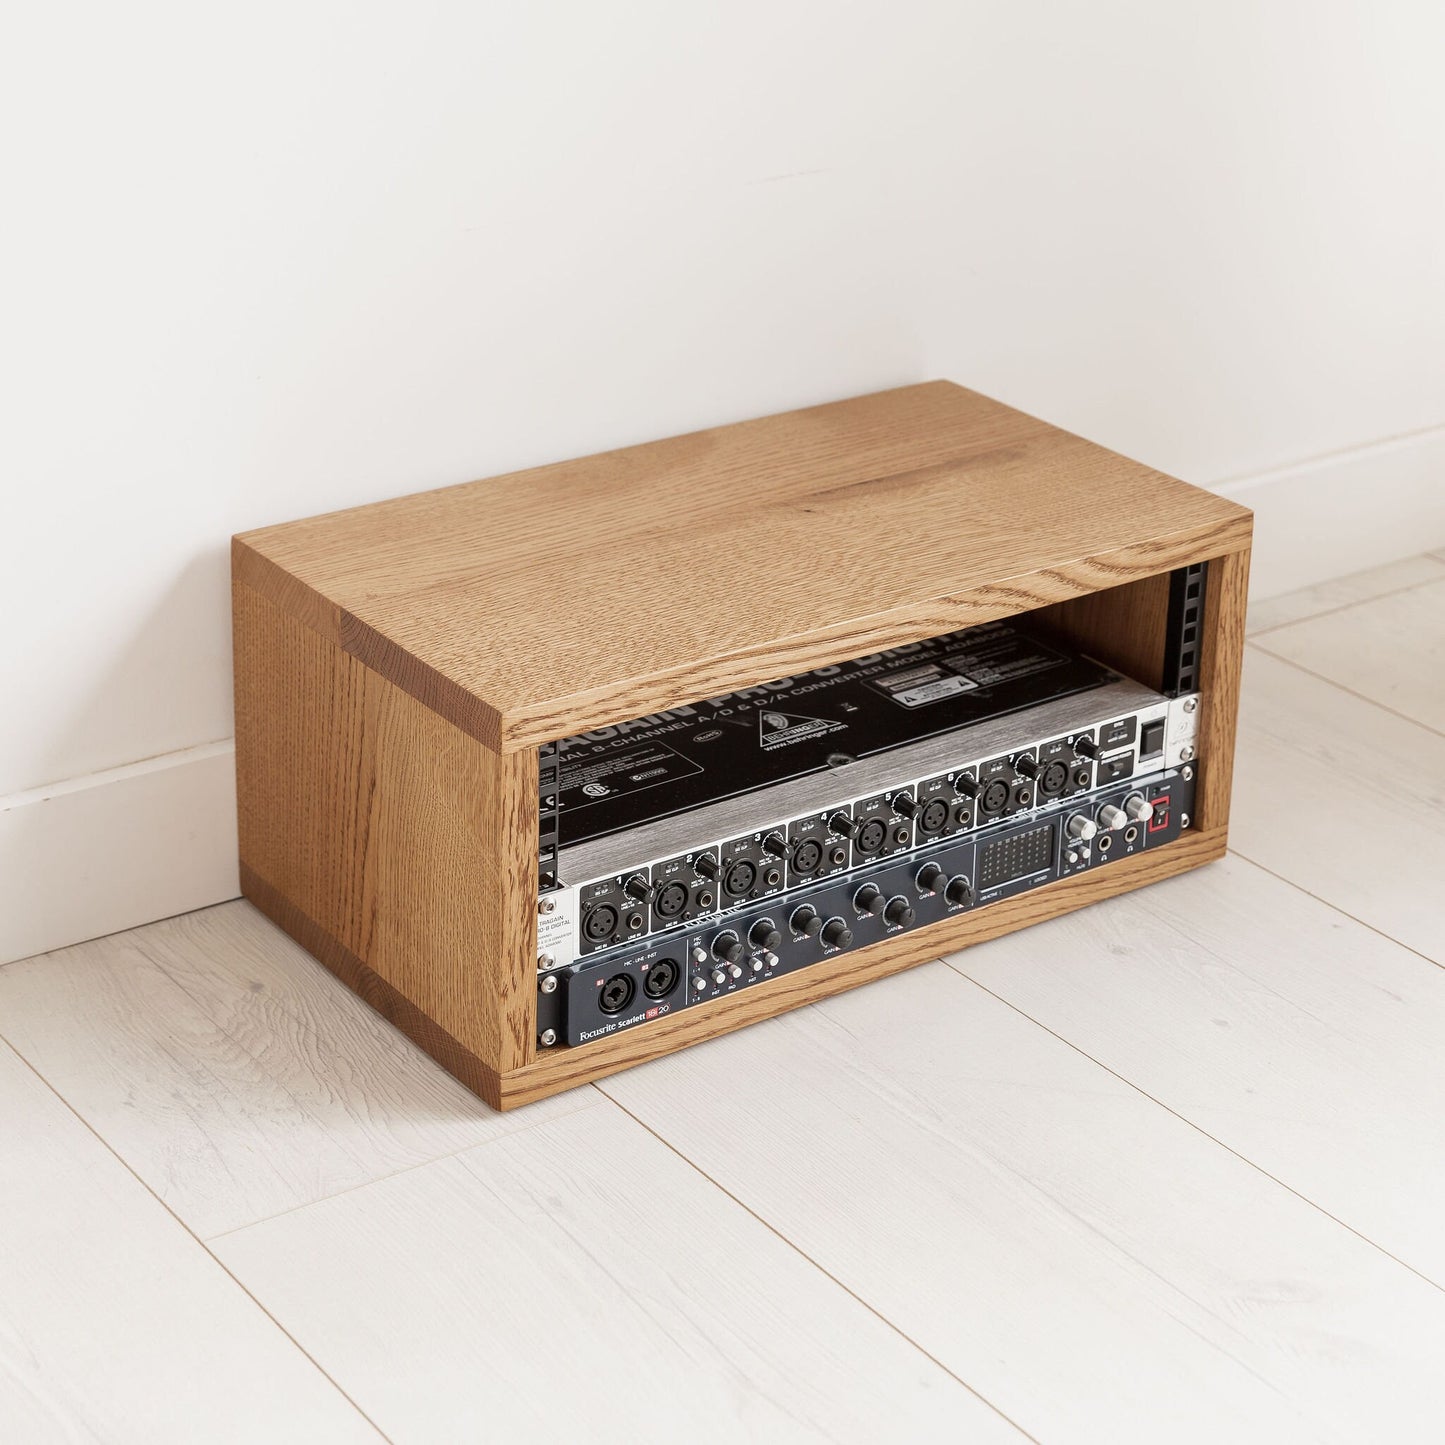 19" Rack Pod Desk Top Case Cabinet. Made From Solid Oak Hardwood Or Birch Plywood